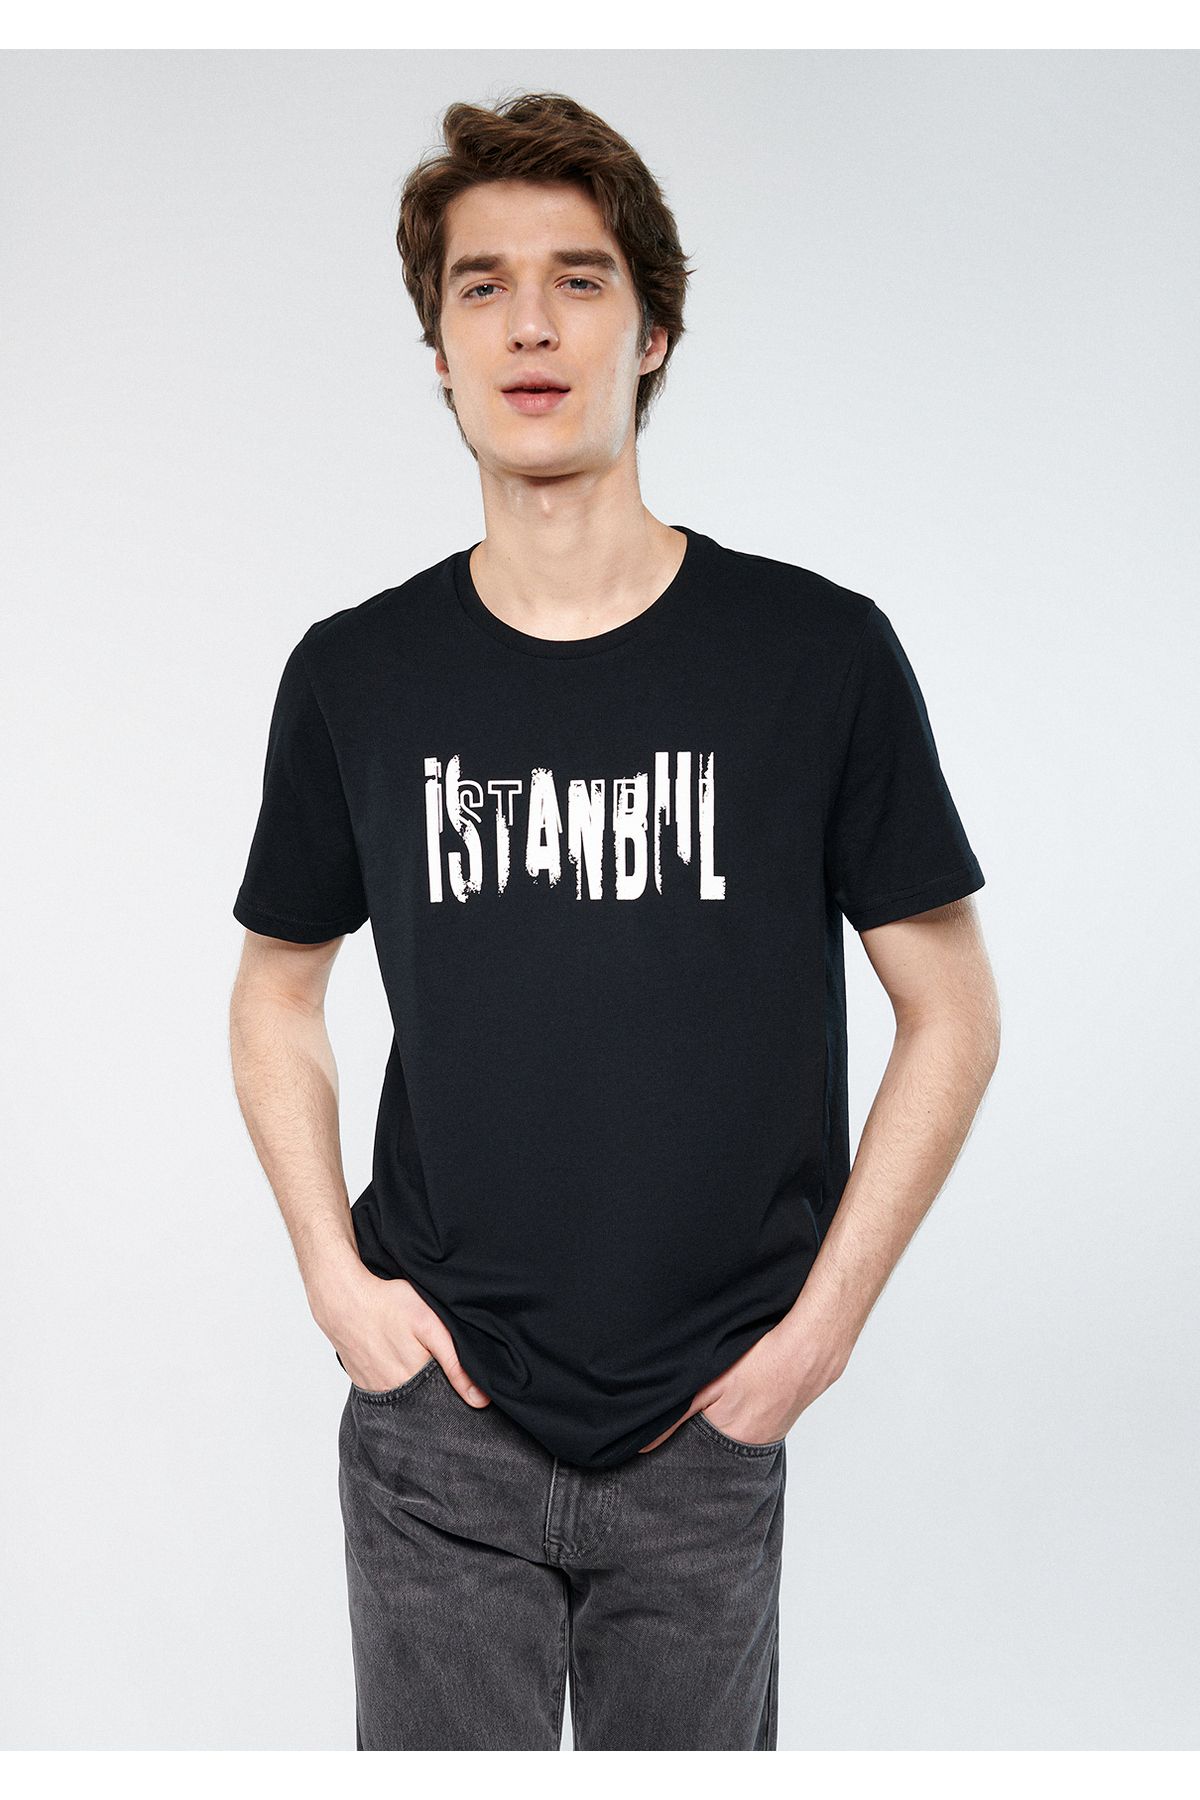 Mavi تی شرت سیاه چاپی استانبول مناسب / برش معمولی 067116-900